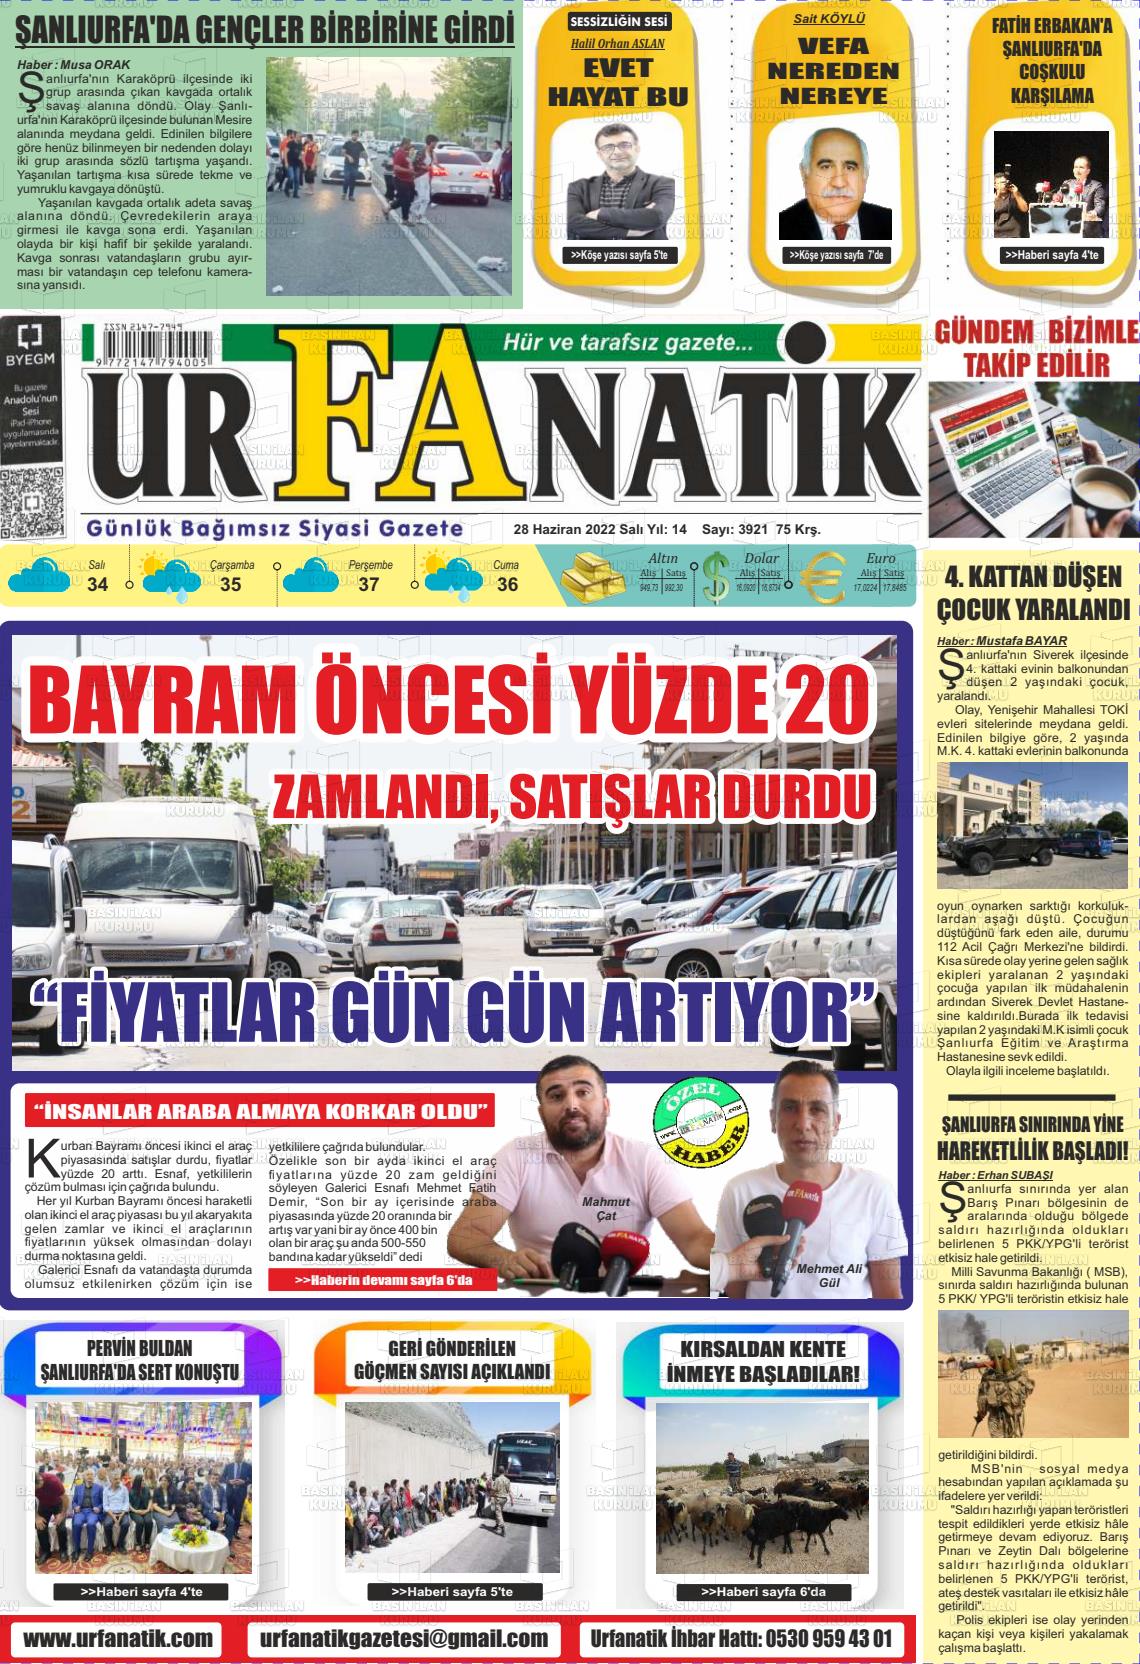 28 Haziran 2022 Urfanatik Gazete Manşeti